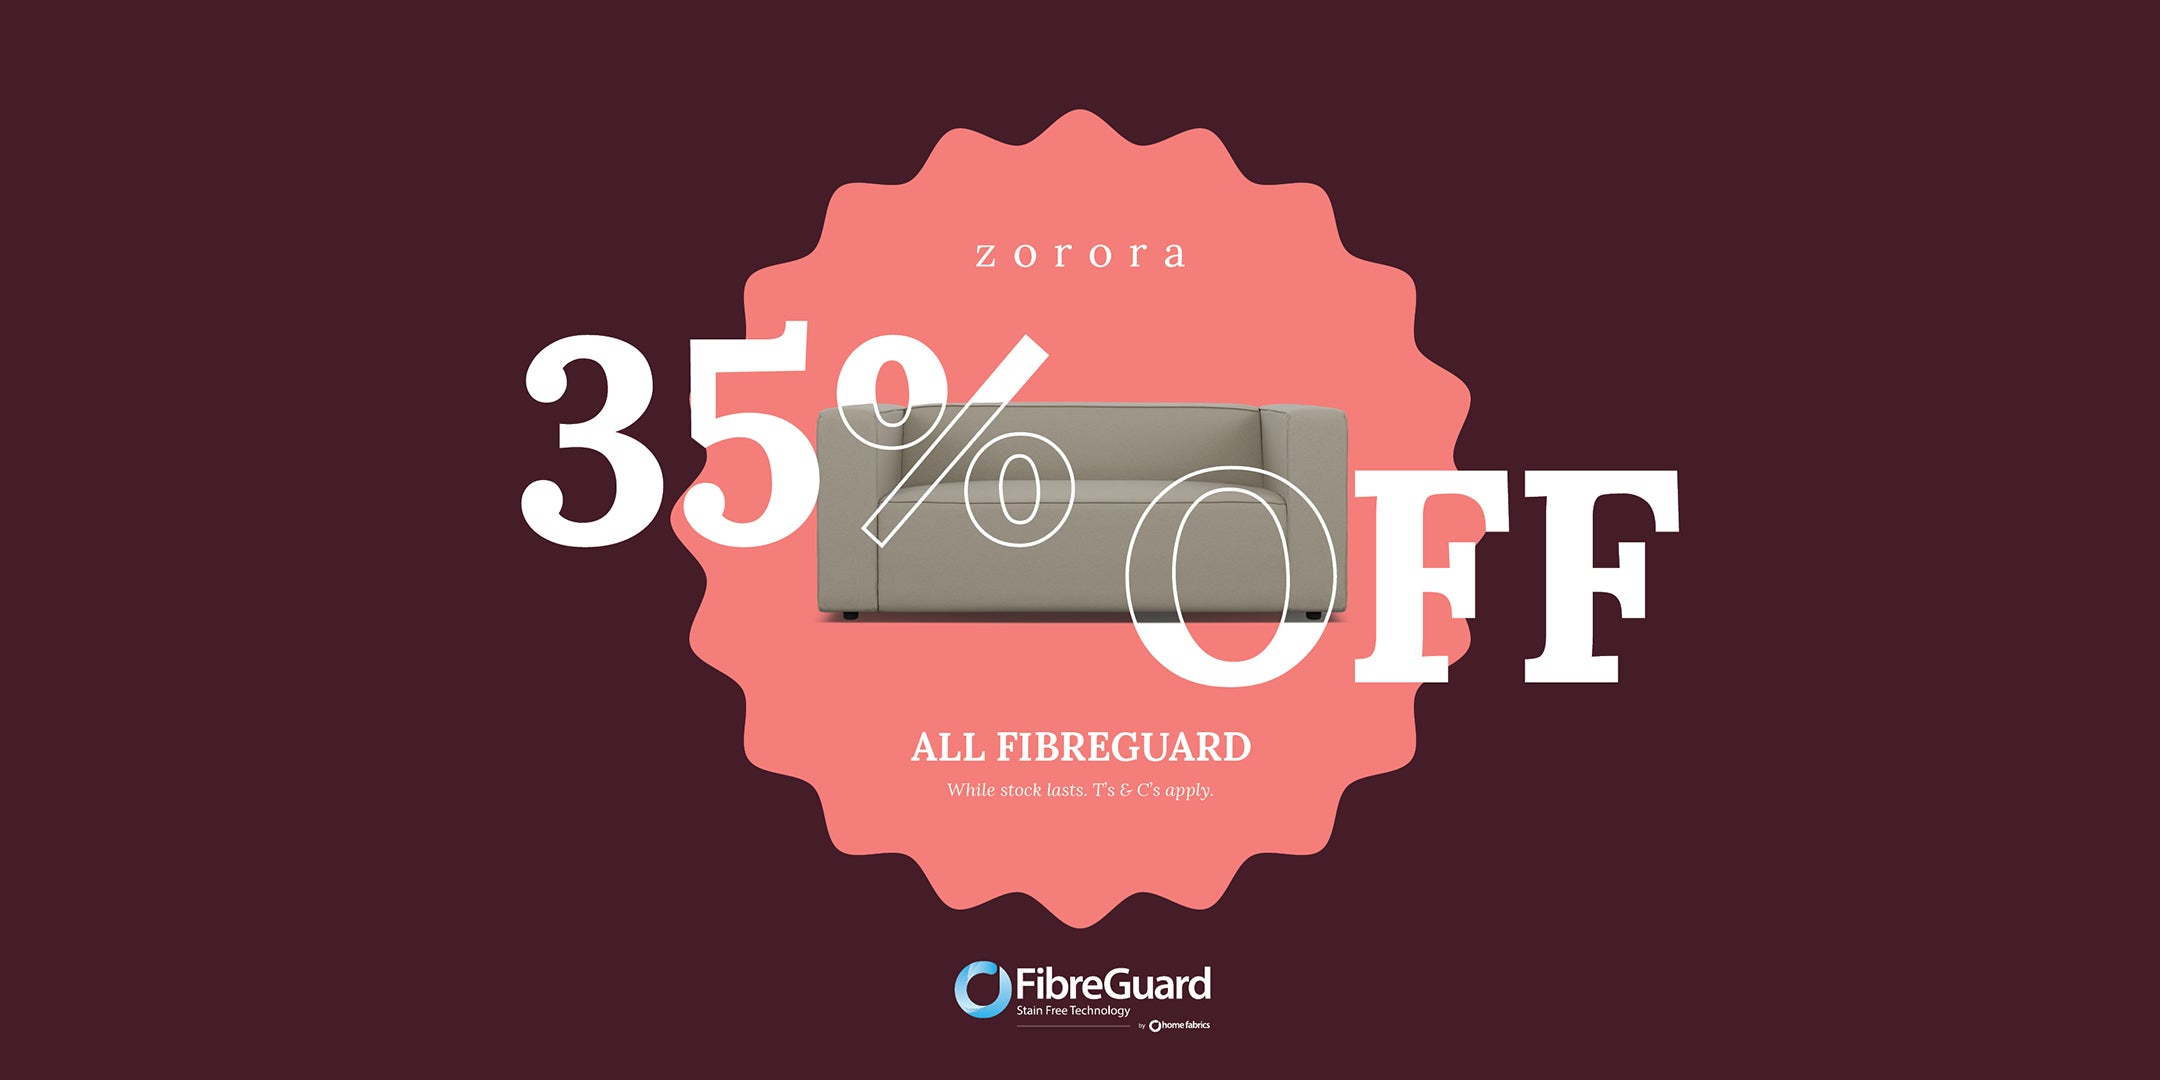 Zorora 35% Off promotion on all fibreguard fabrics